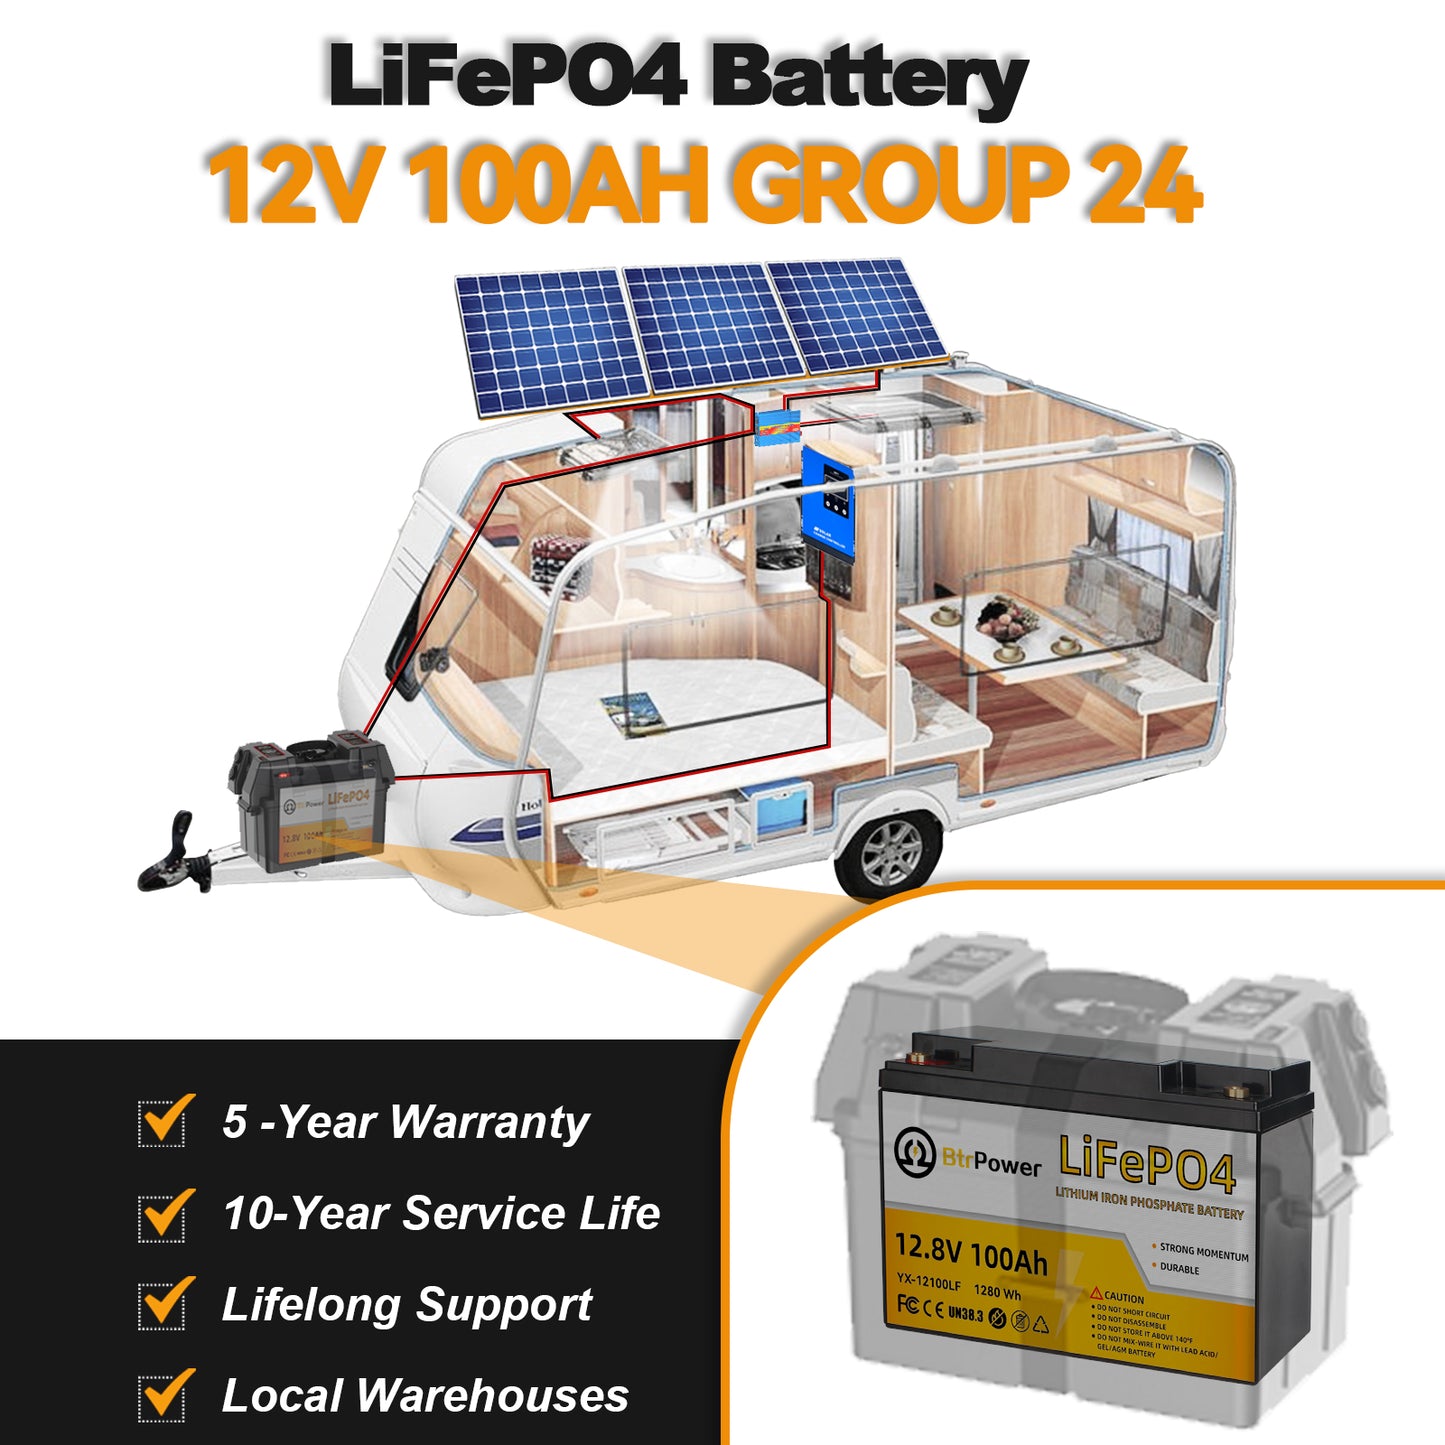 12V 100Ah Gruppe 24 LiFePO4 Lithium-Batterie eingebaute 100A BMS, 1280Wh Energie